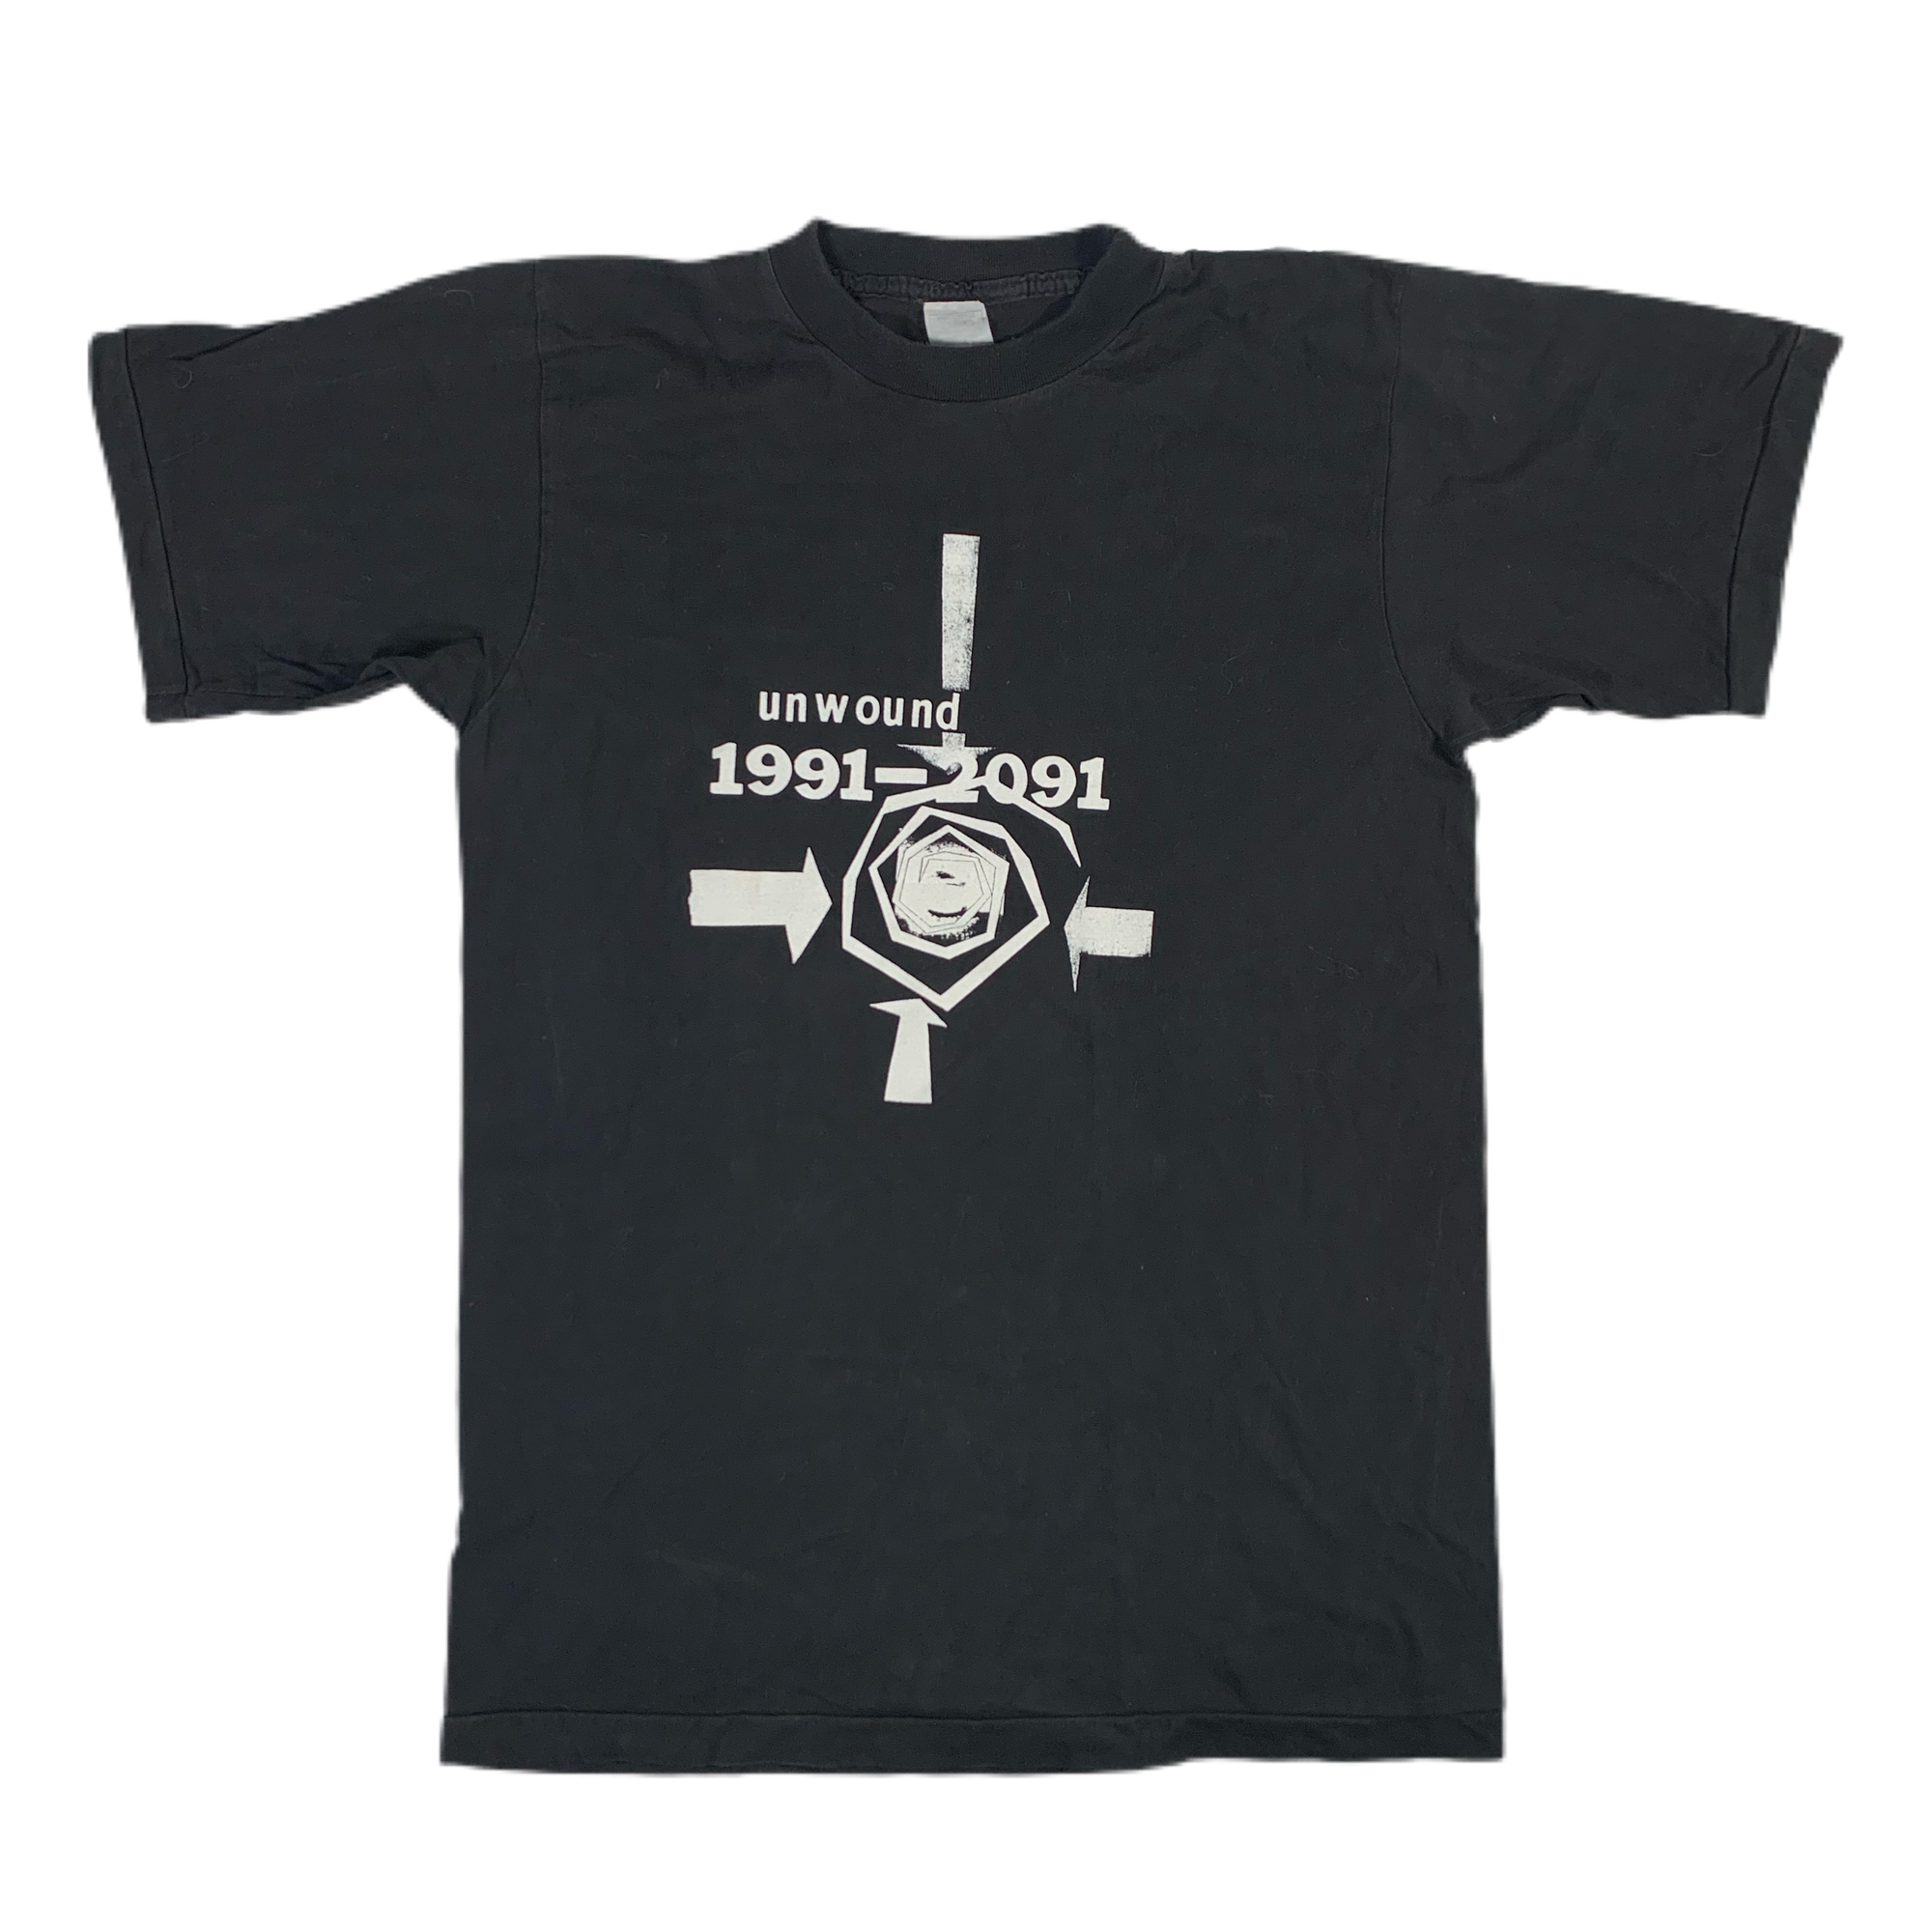 Vintage Unwound “1991-2091” T-Shirt - jointcustodydc